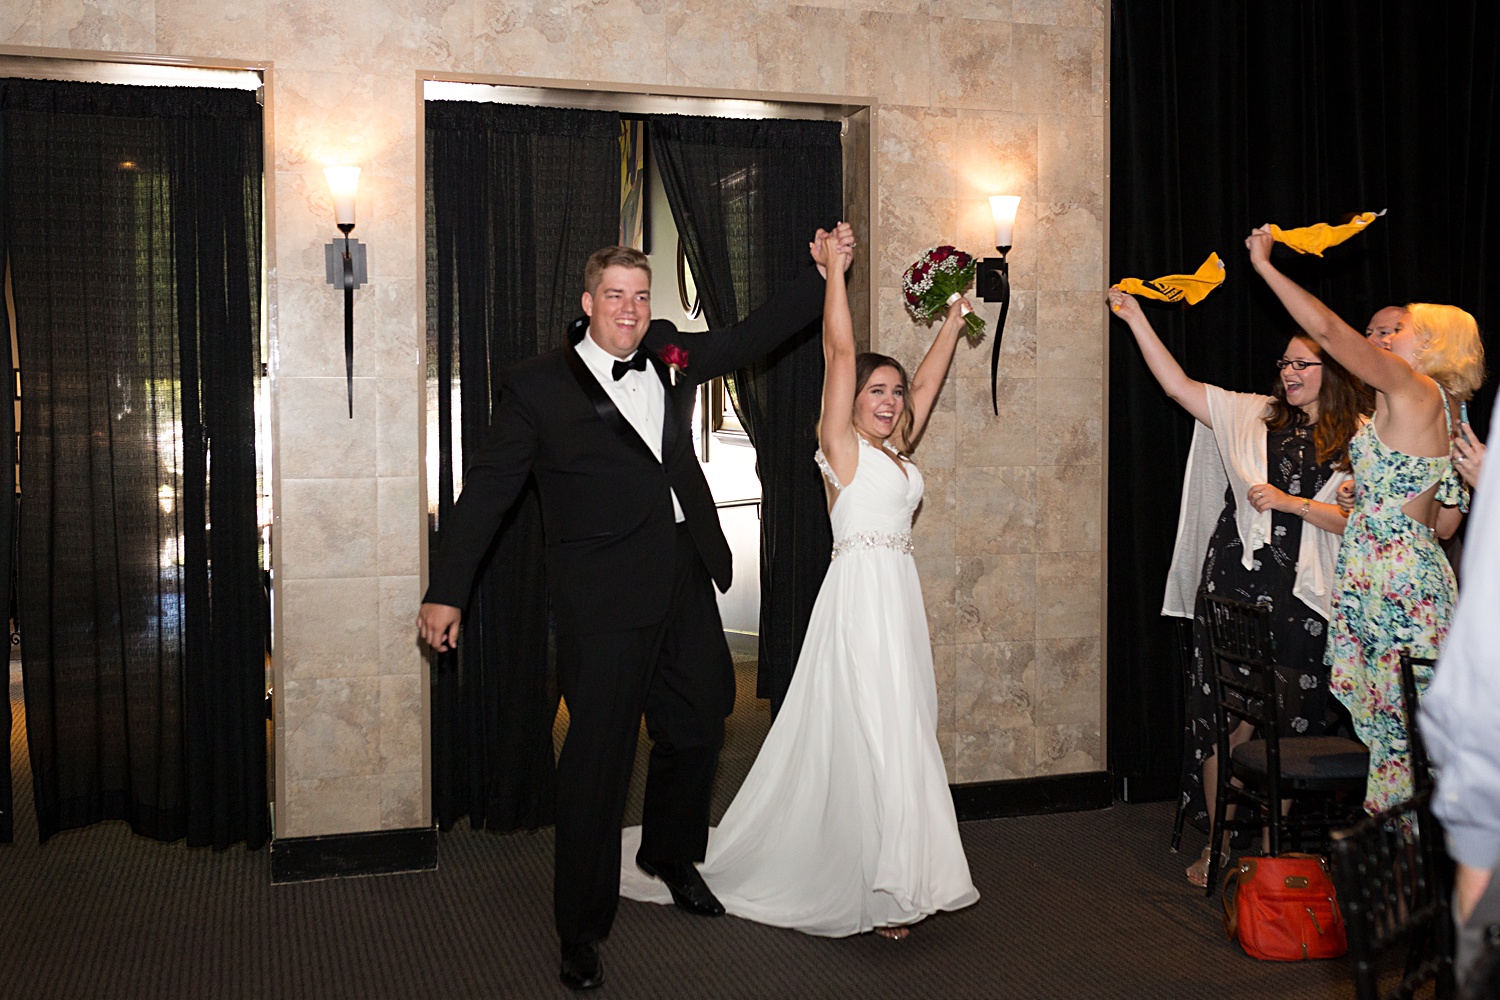 Wedding reception photos at Maceli's in Lawrence, KS